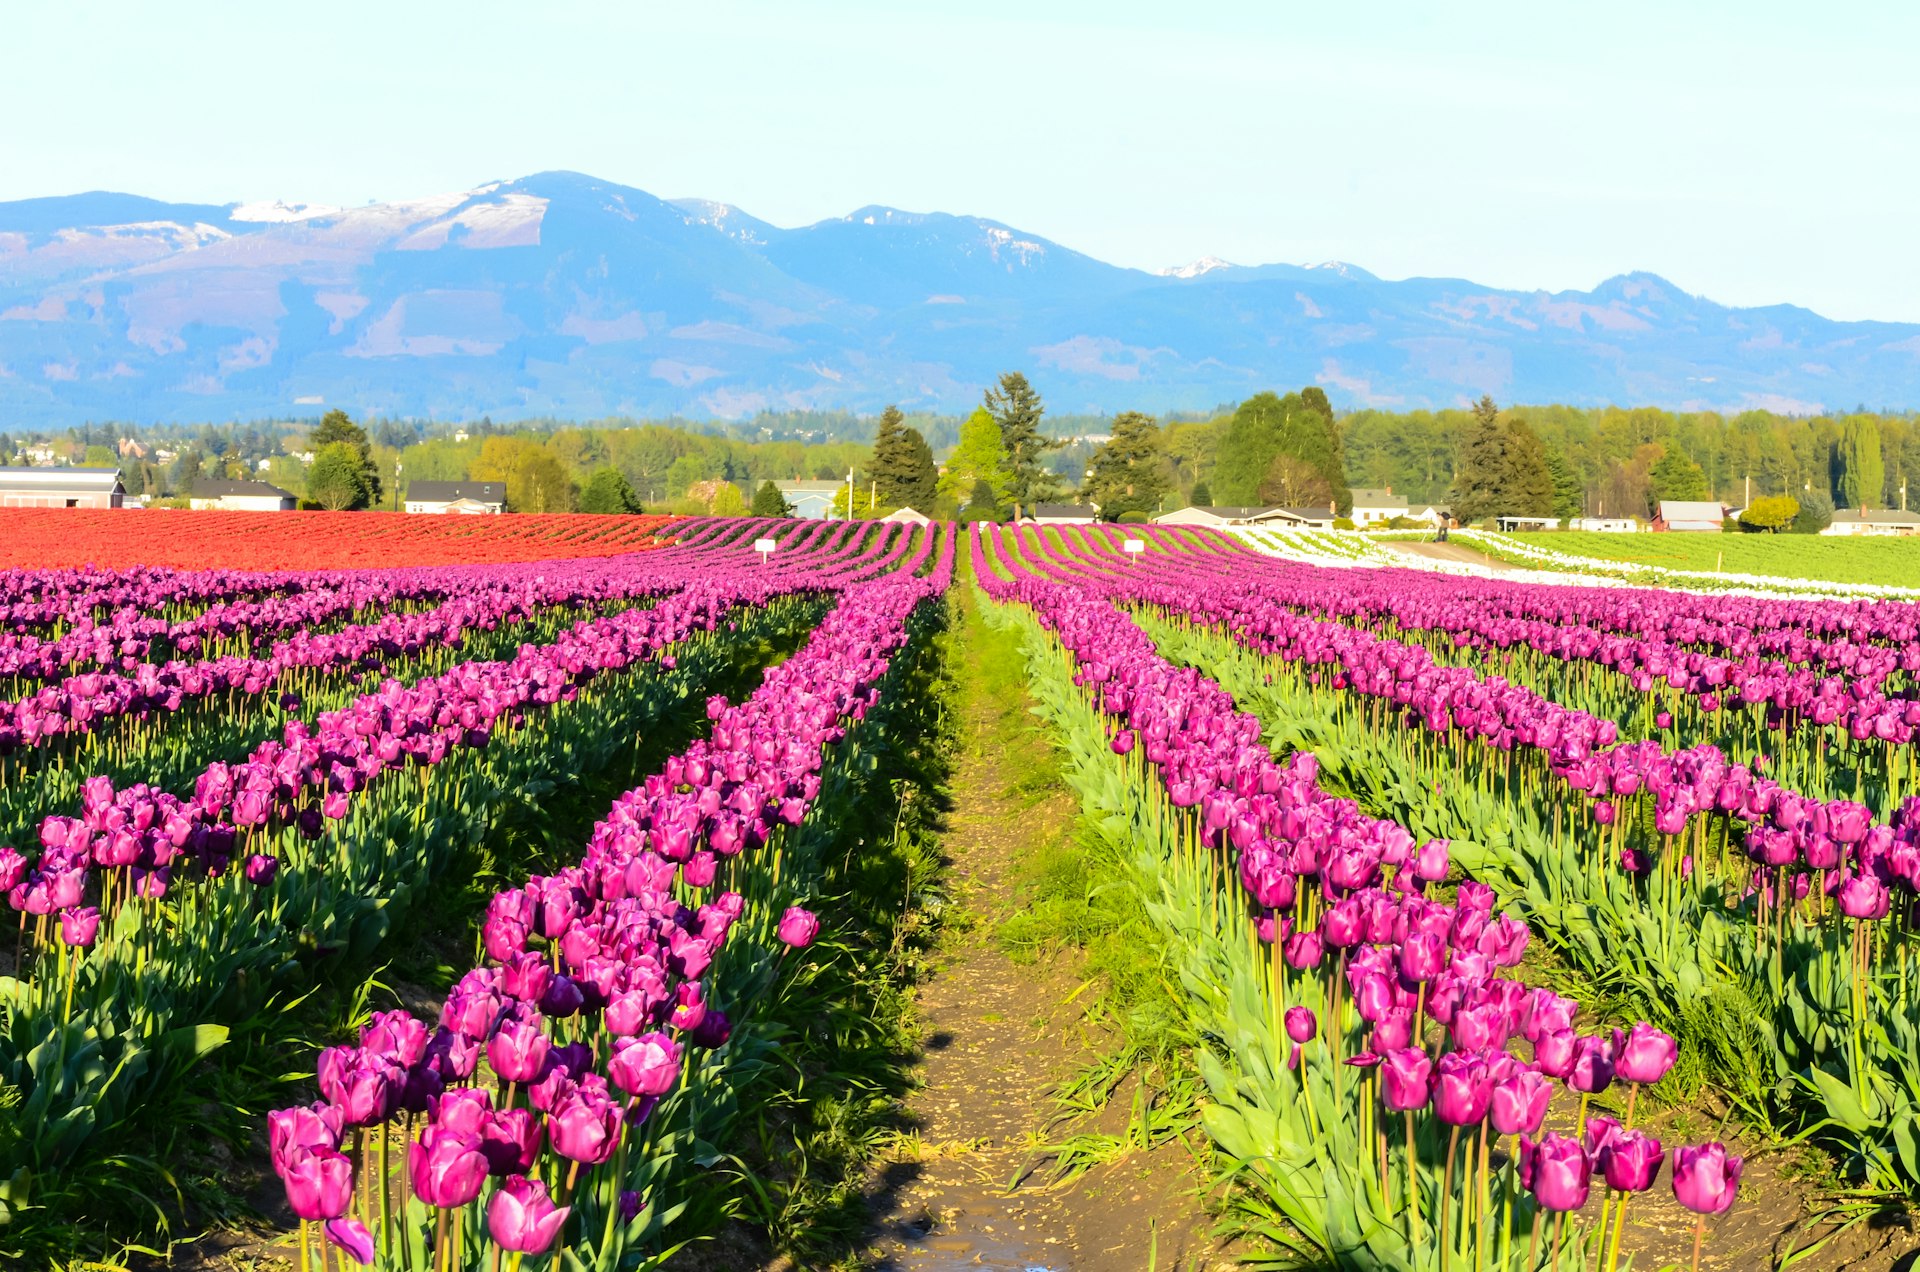 Fields of purple, red, white tulips in full bloom under a clear blue sky